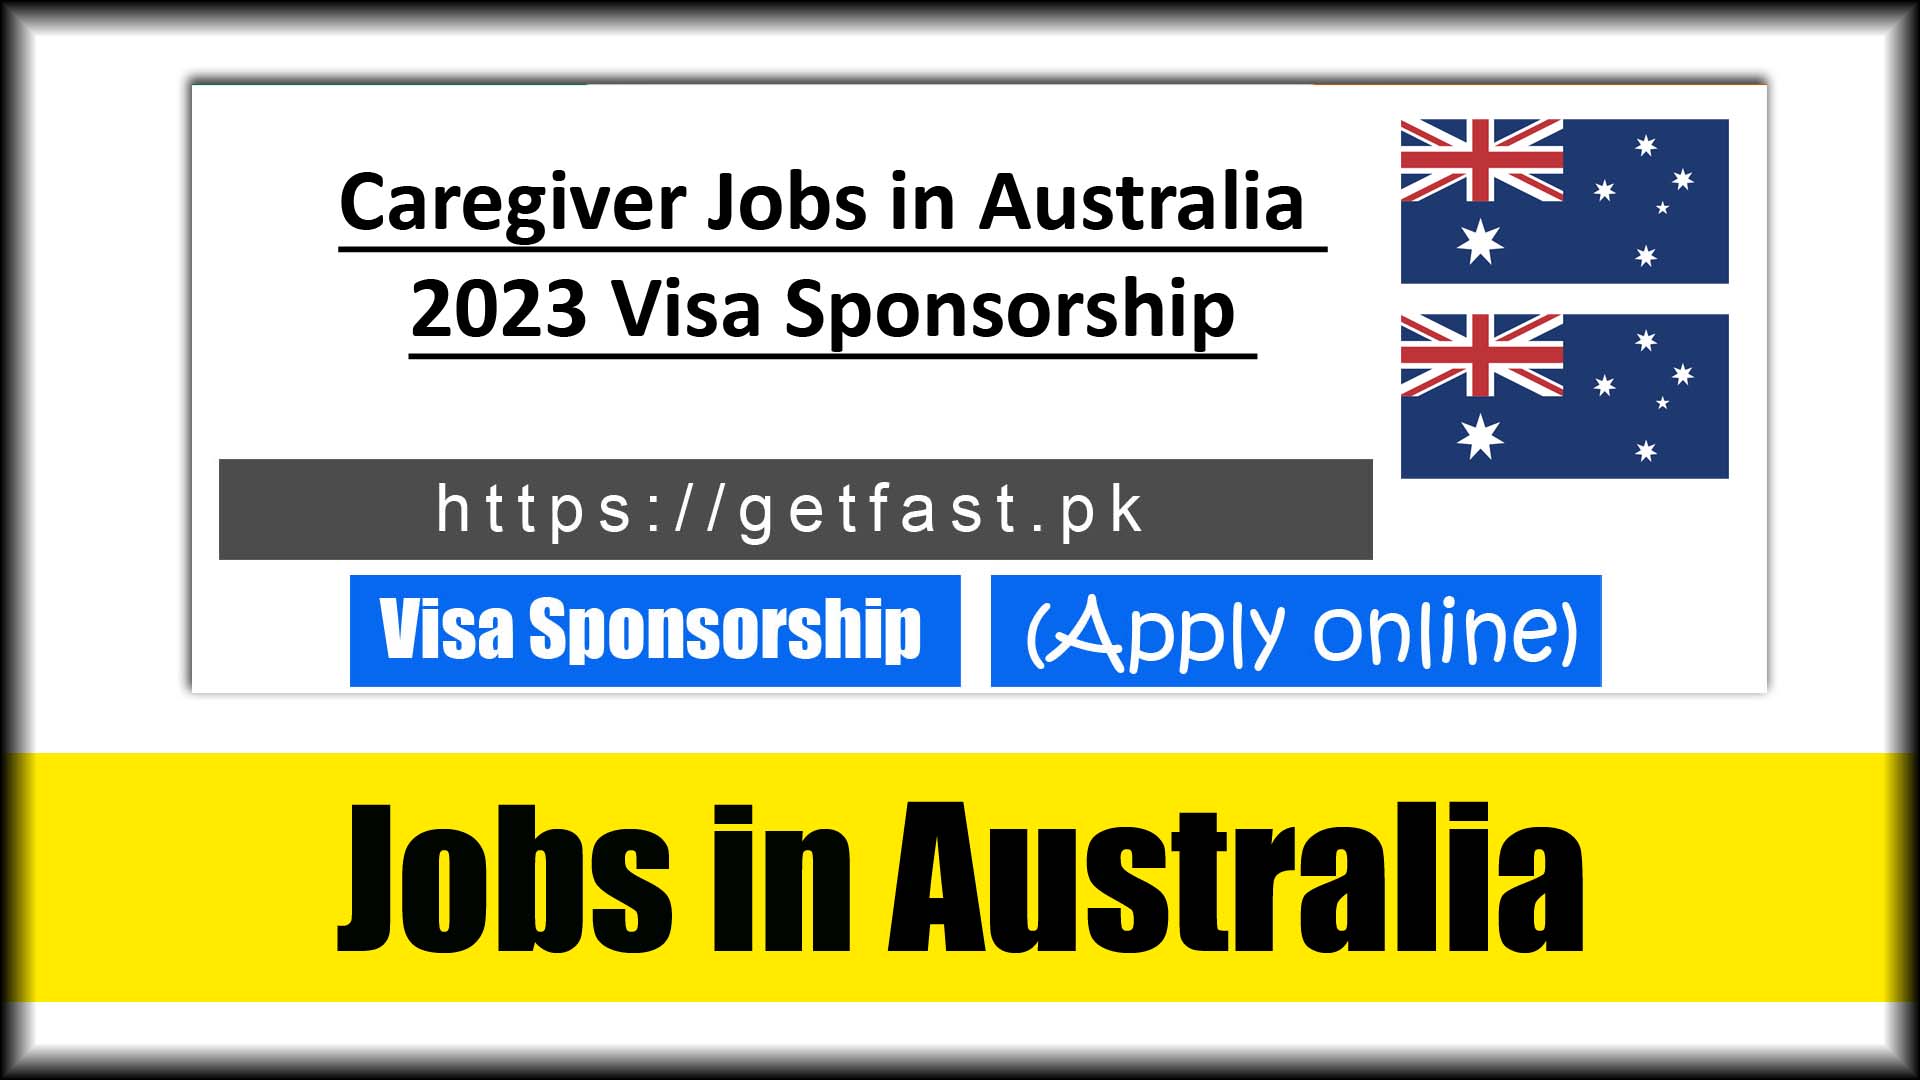 Caregiver Jobs in Australia 2023 Visa Sponsorship - Apply Now